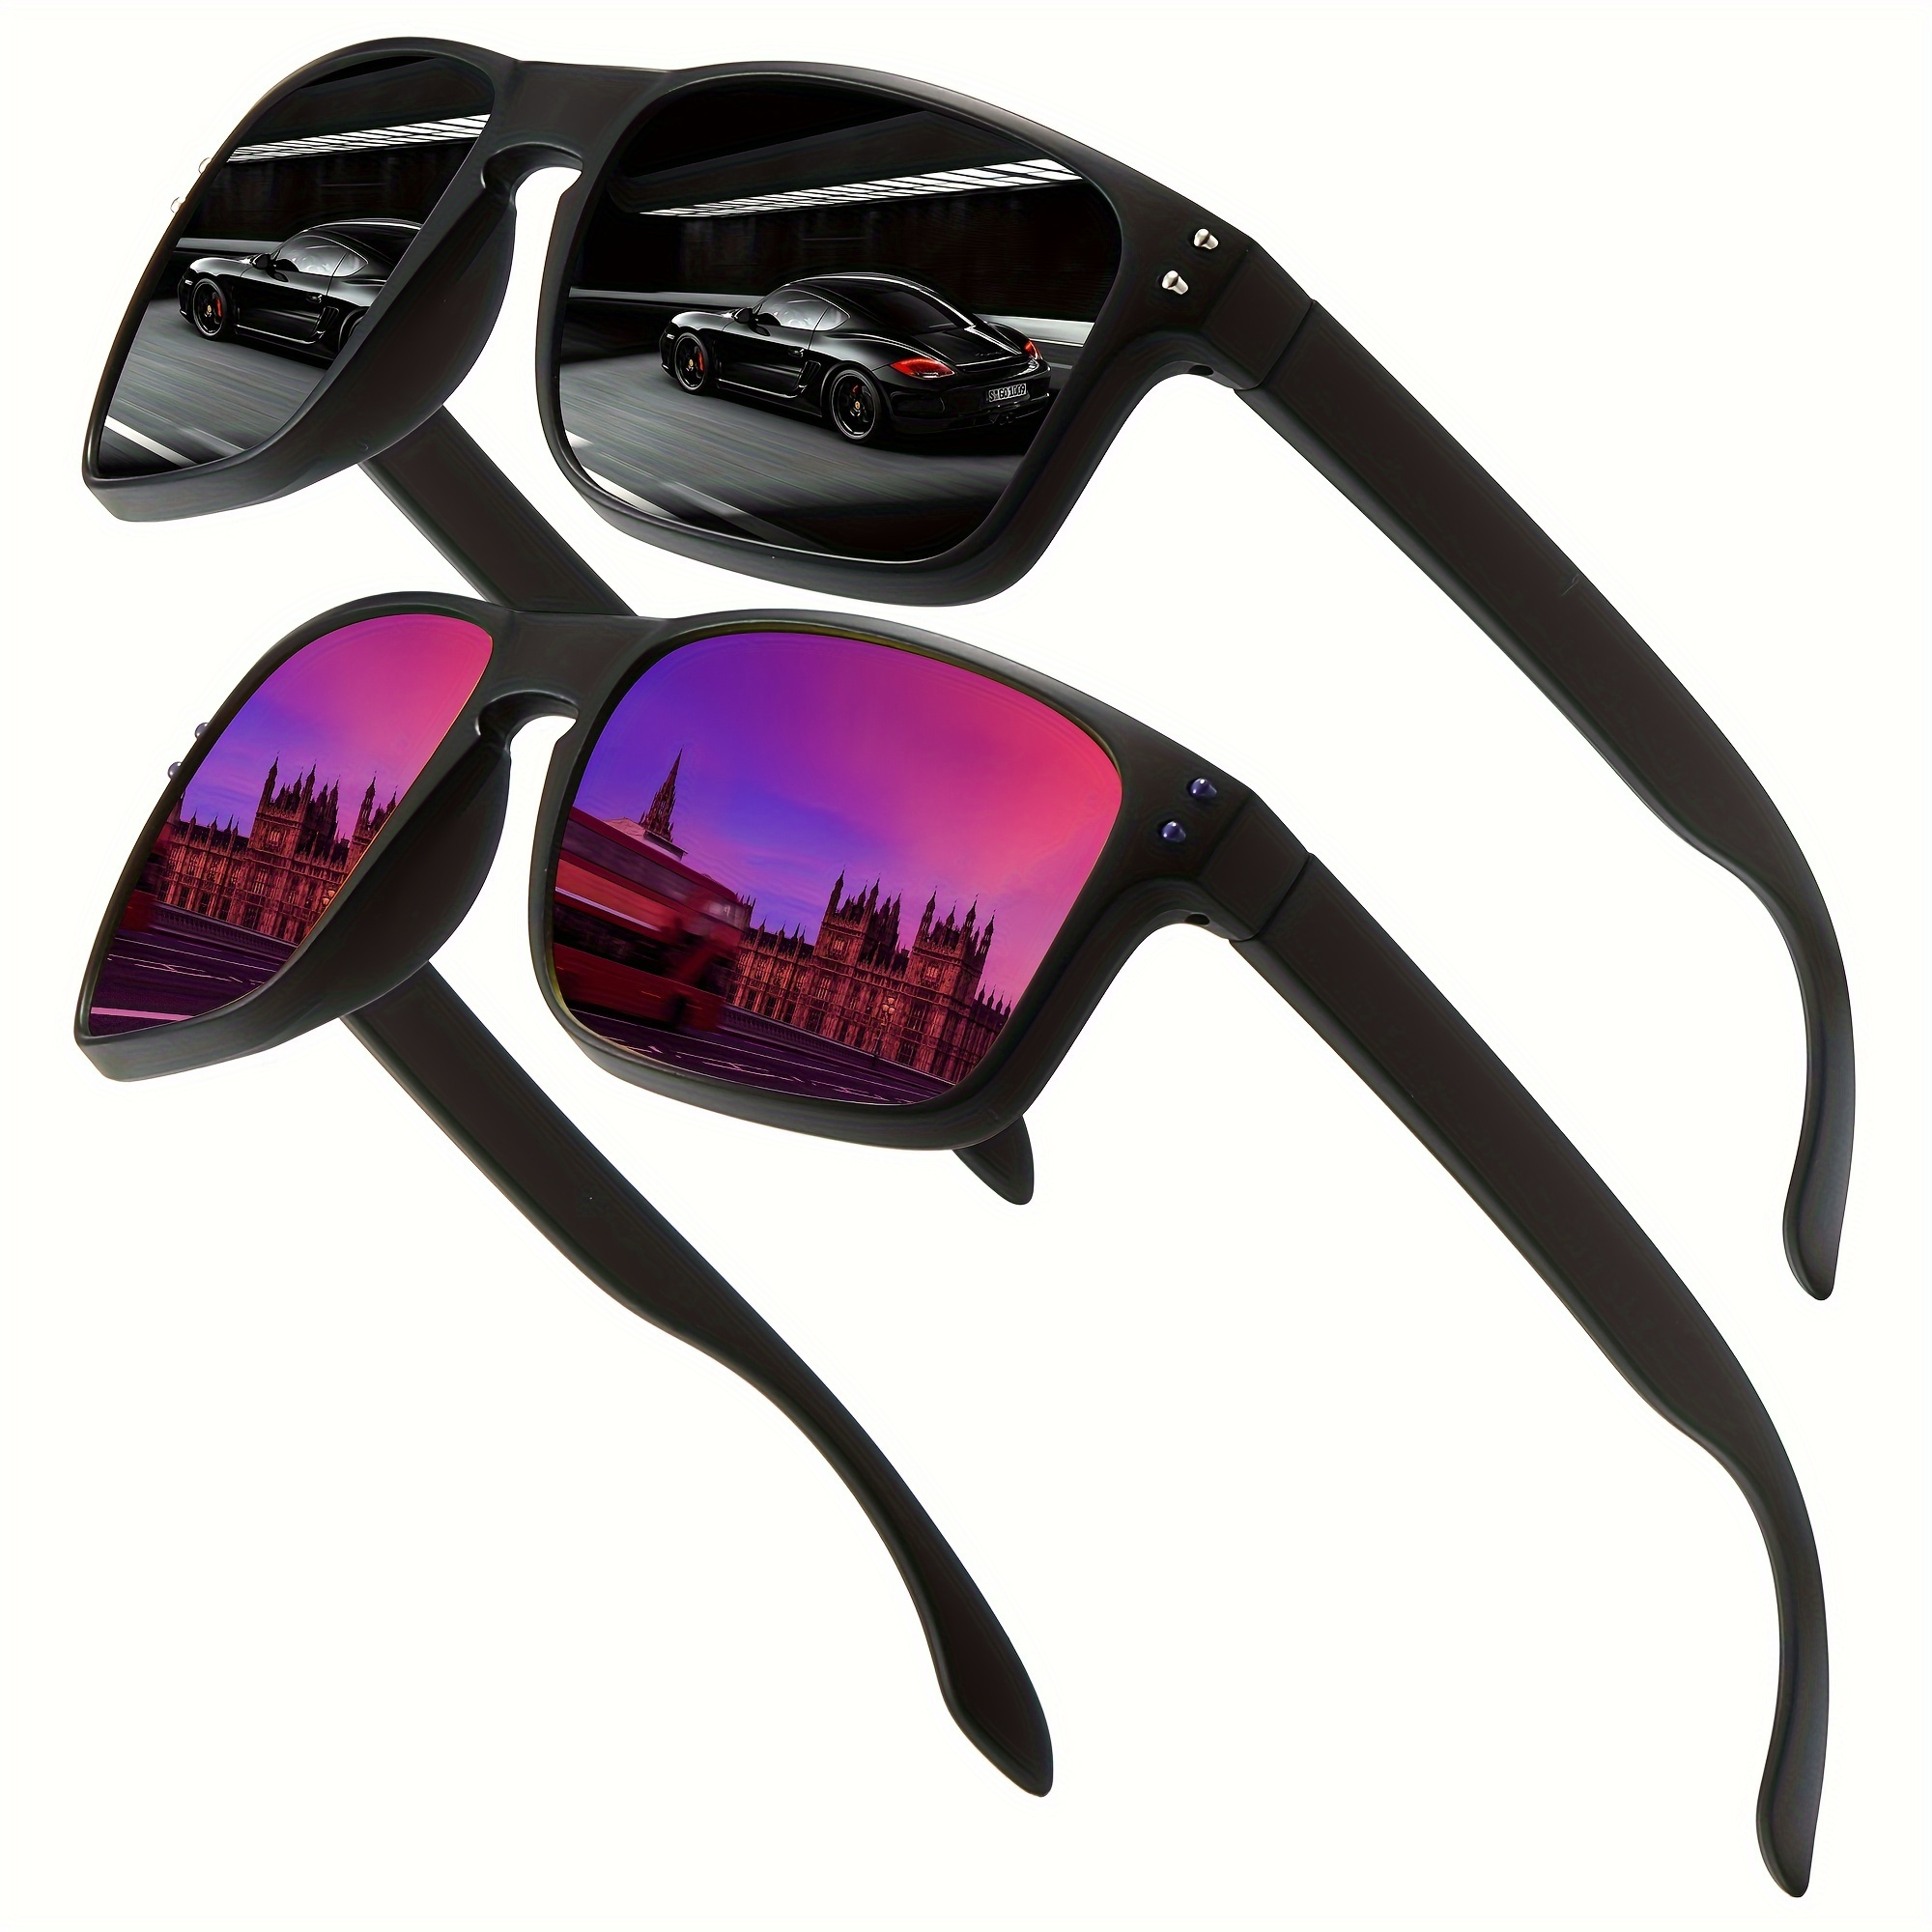 Scvcn Fishing Sunglasses Square Polarized UV400 Fishing Glasses For Men  Women Driving Golf Running Cycling Glasses Eyewear